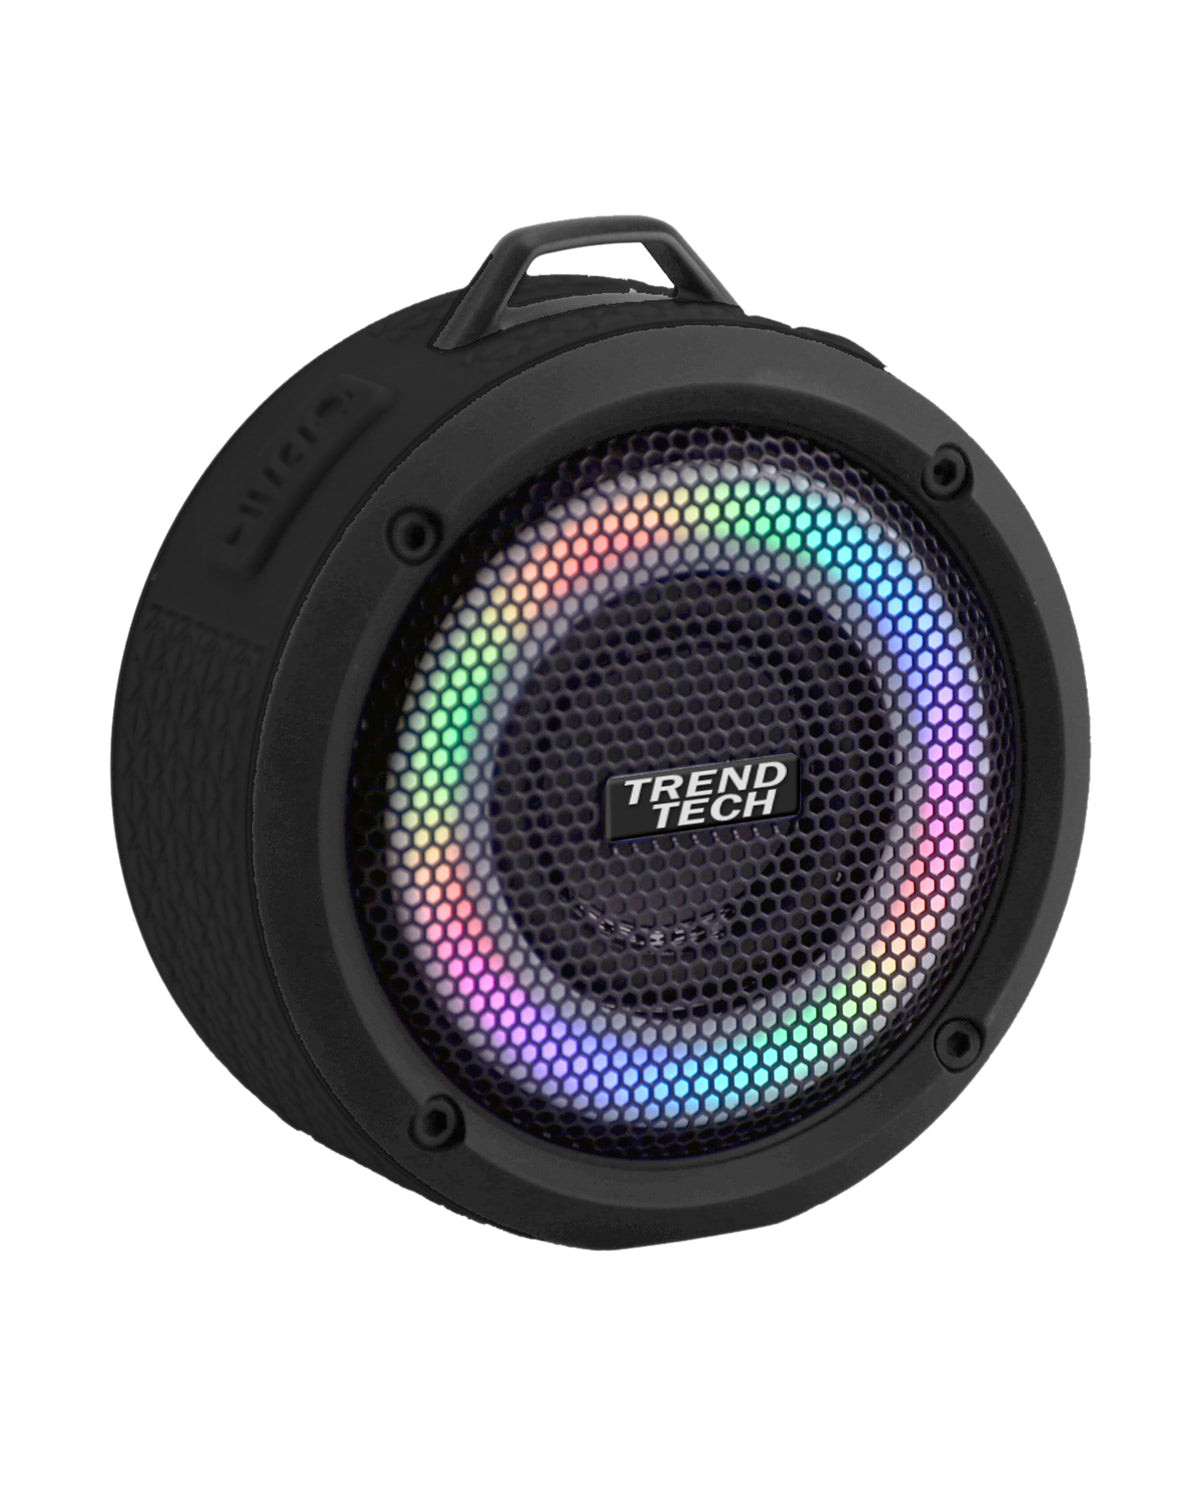 Super Sound Waterproof Led Speaker - Black